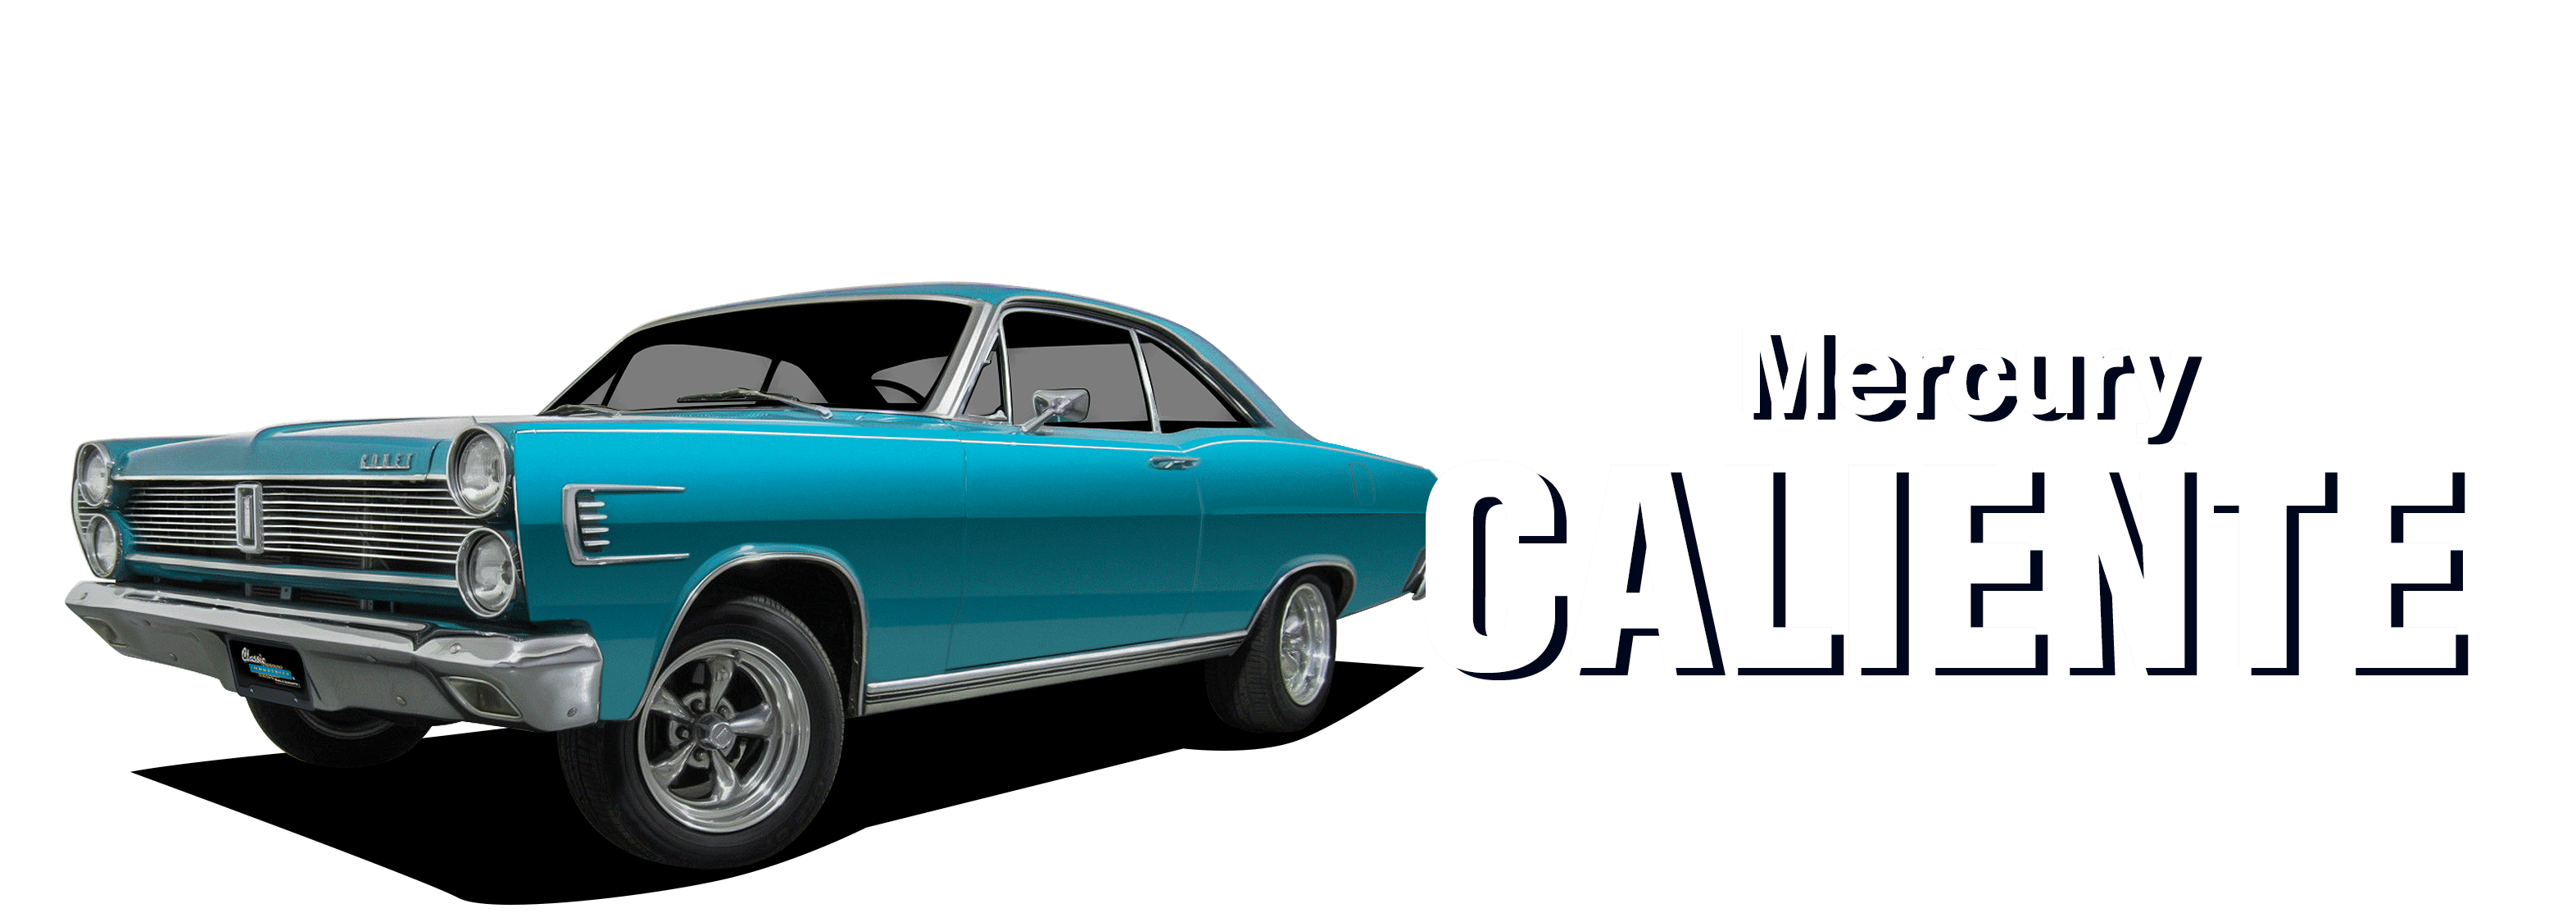 Mercury-Caliente-vehicle-desktop-2023